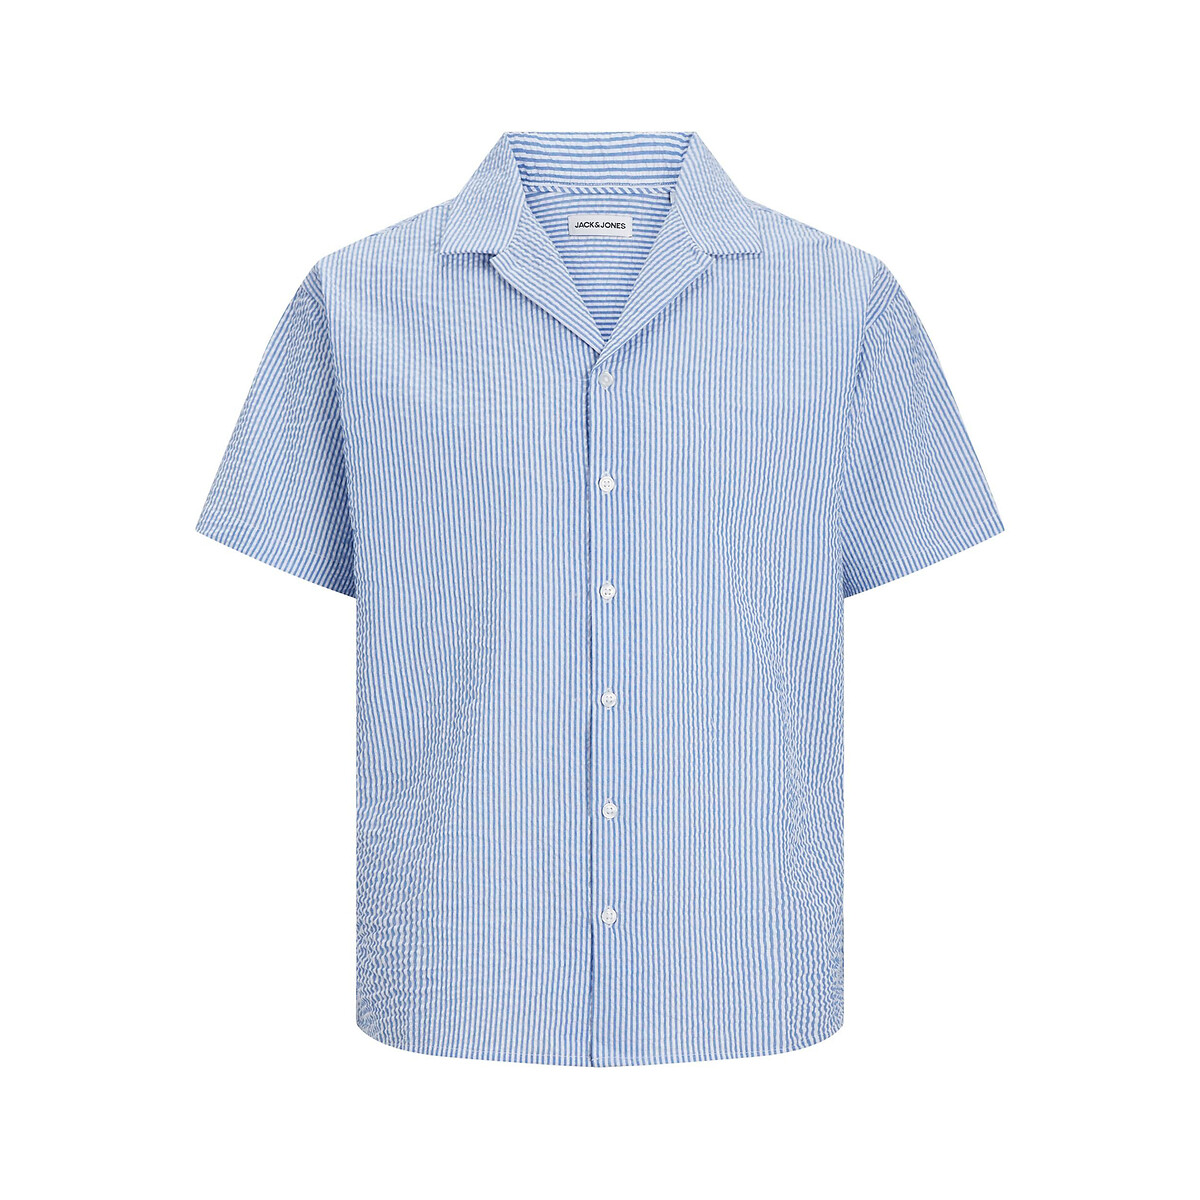 Рубашка из тонкой полосатой ткани XXL синий рубашка из легкой полосатой ткани с вышитым логотипом s синий